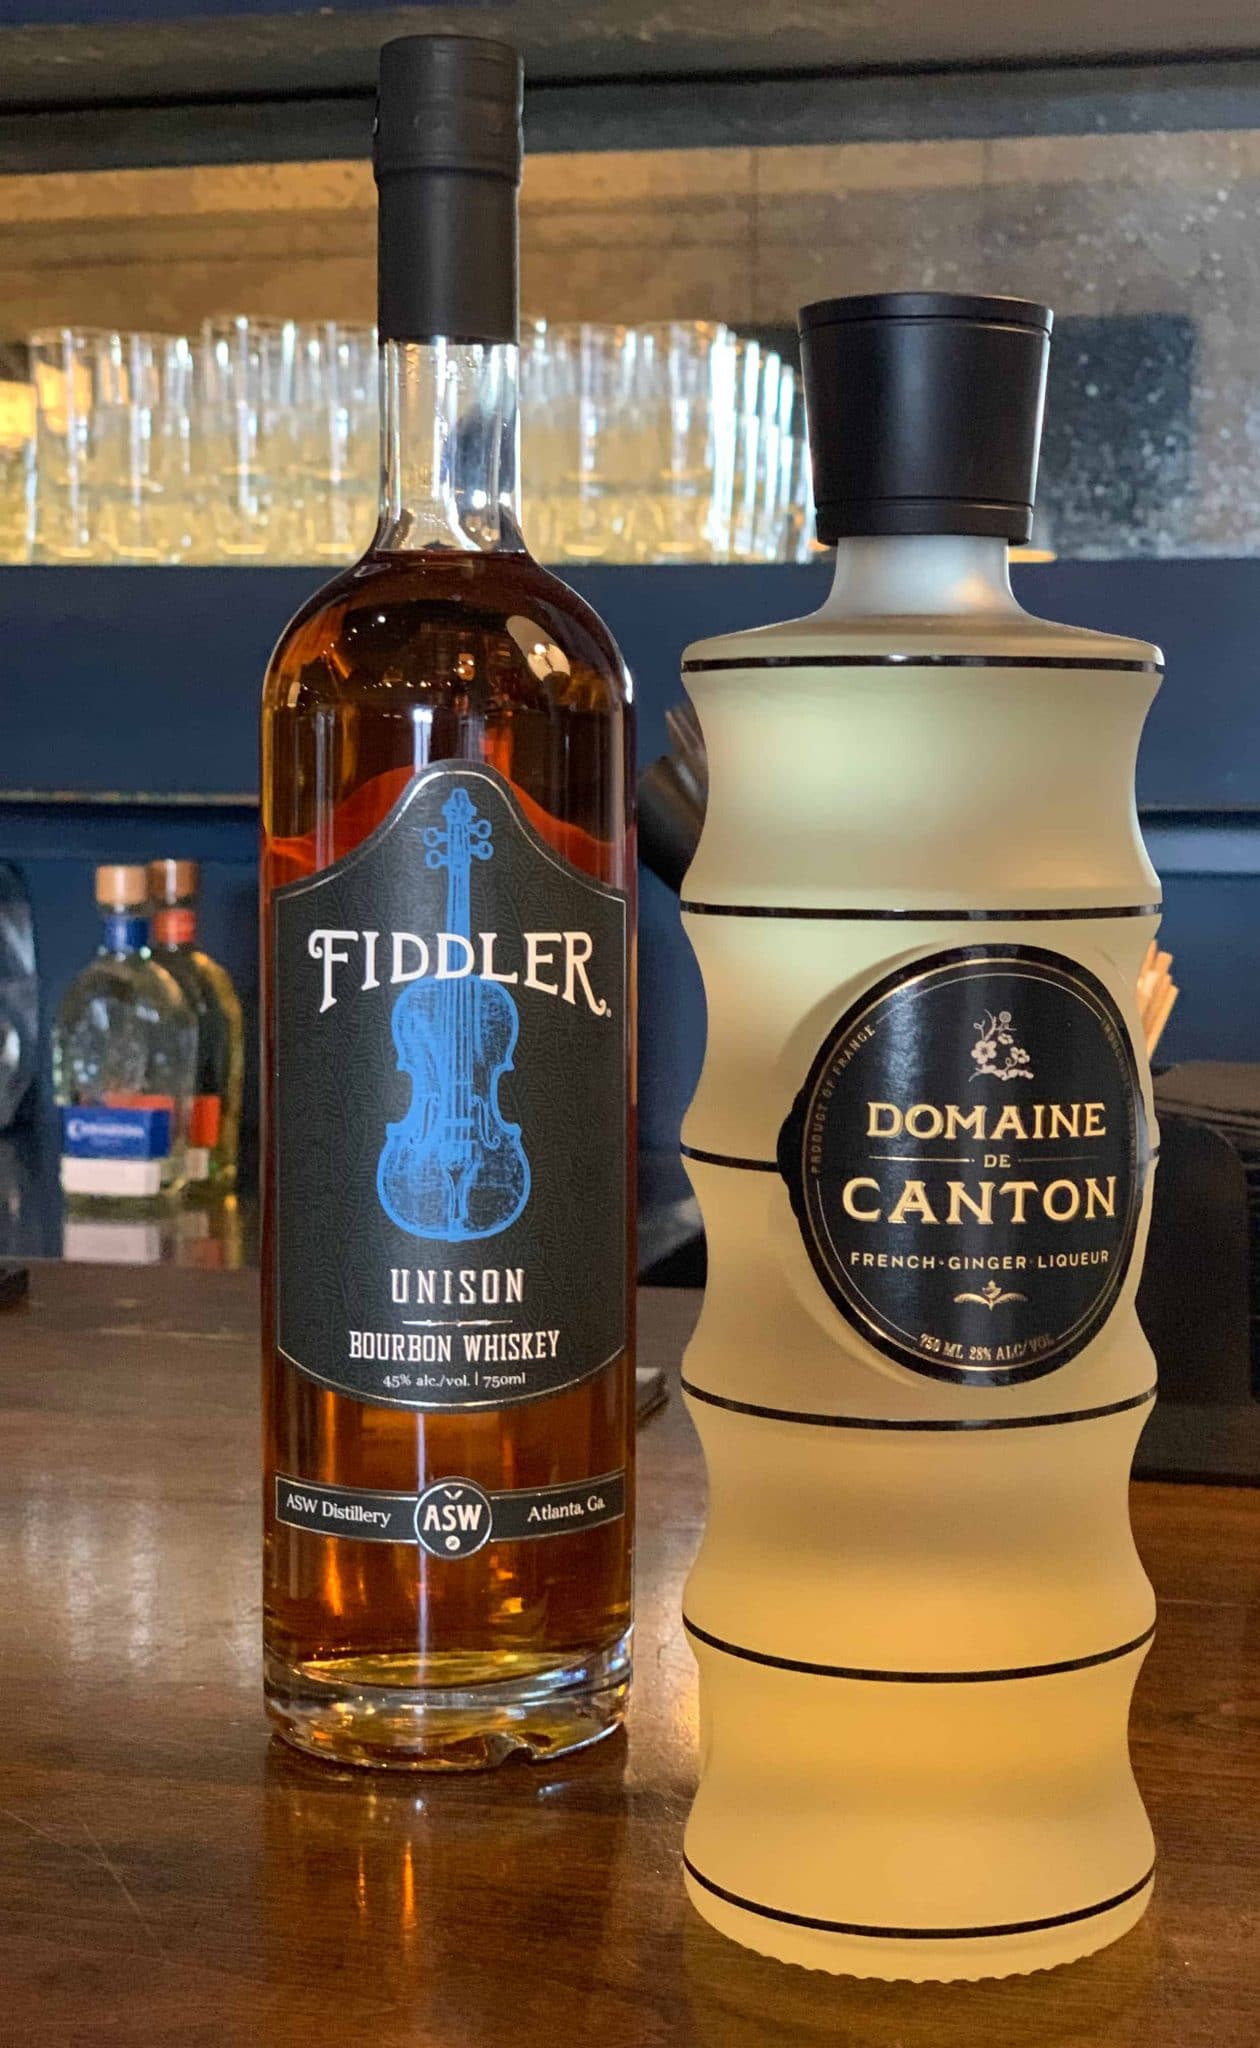 one bottle of fiddlers bourbon whisky and one bottle of domaine de canton ginger liquor